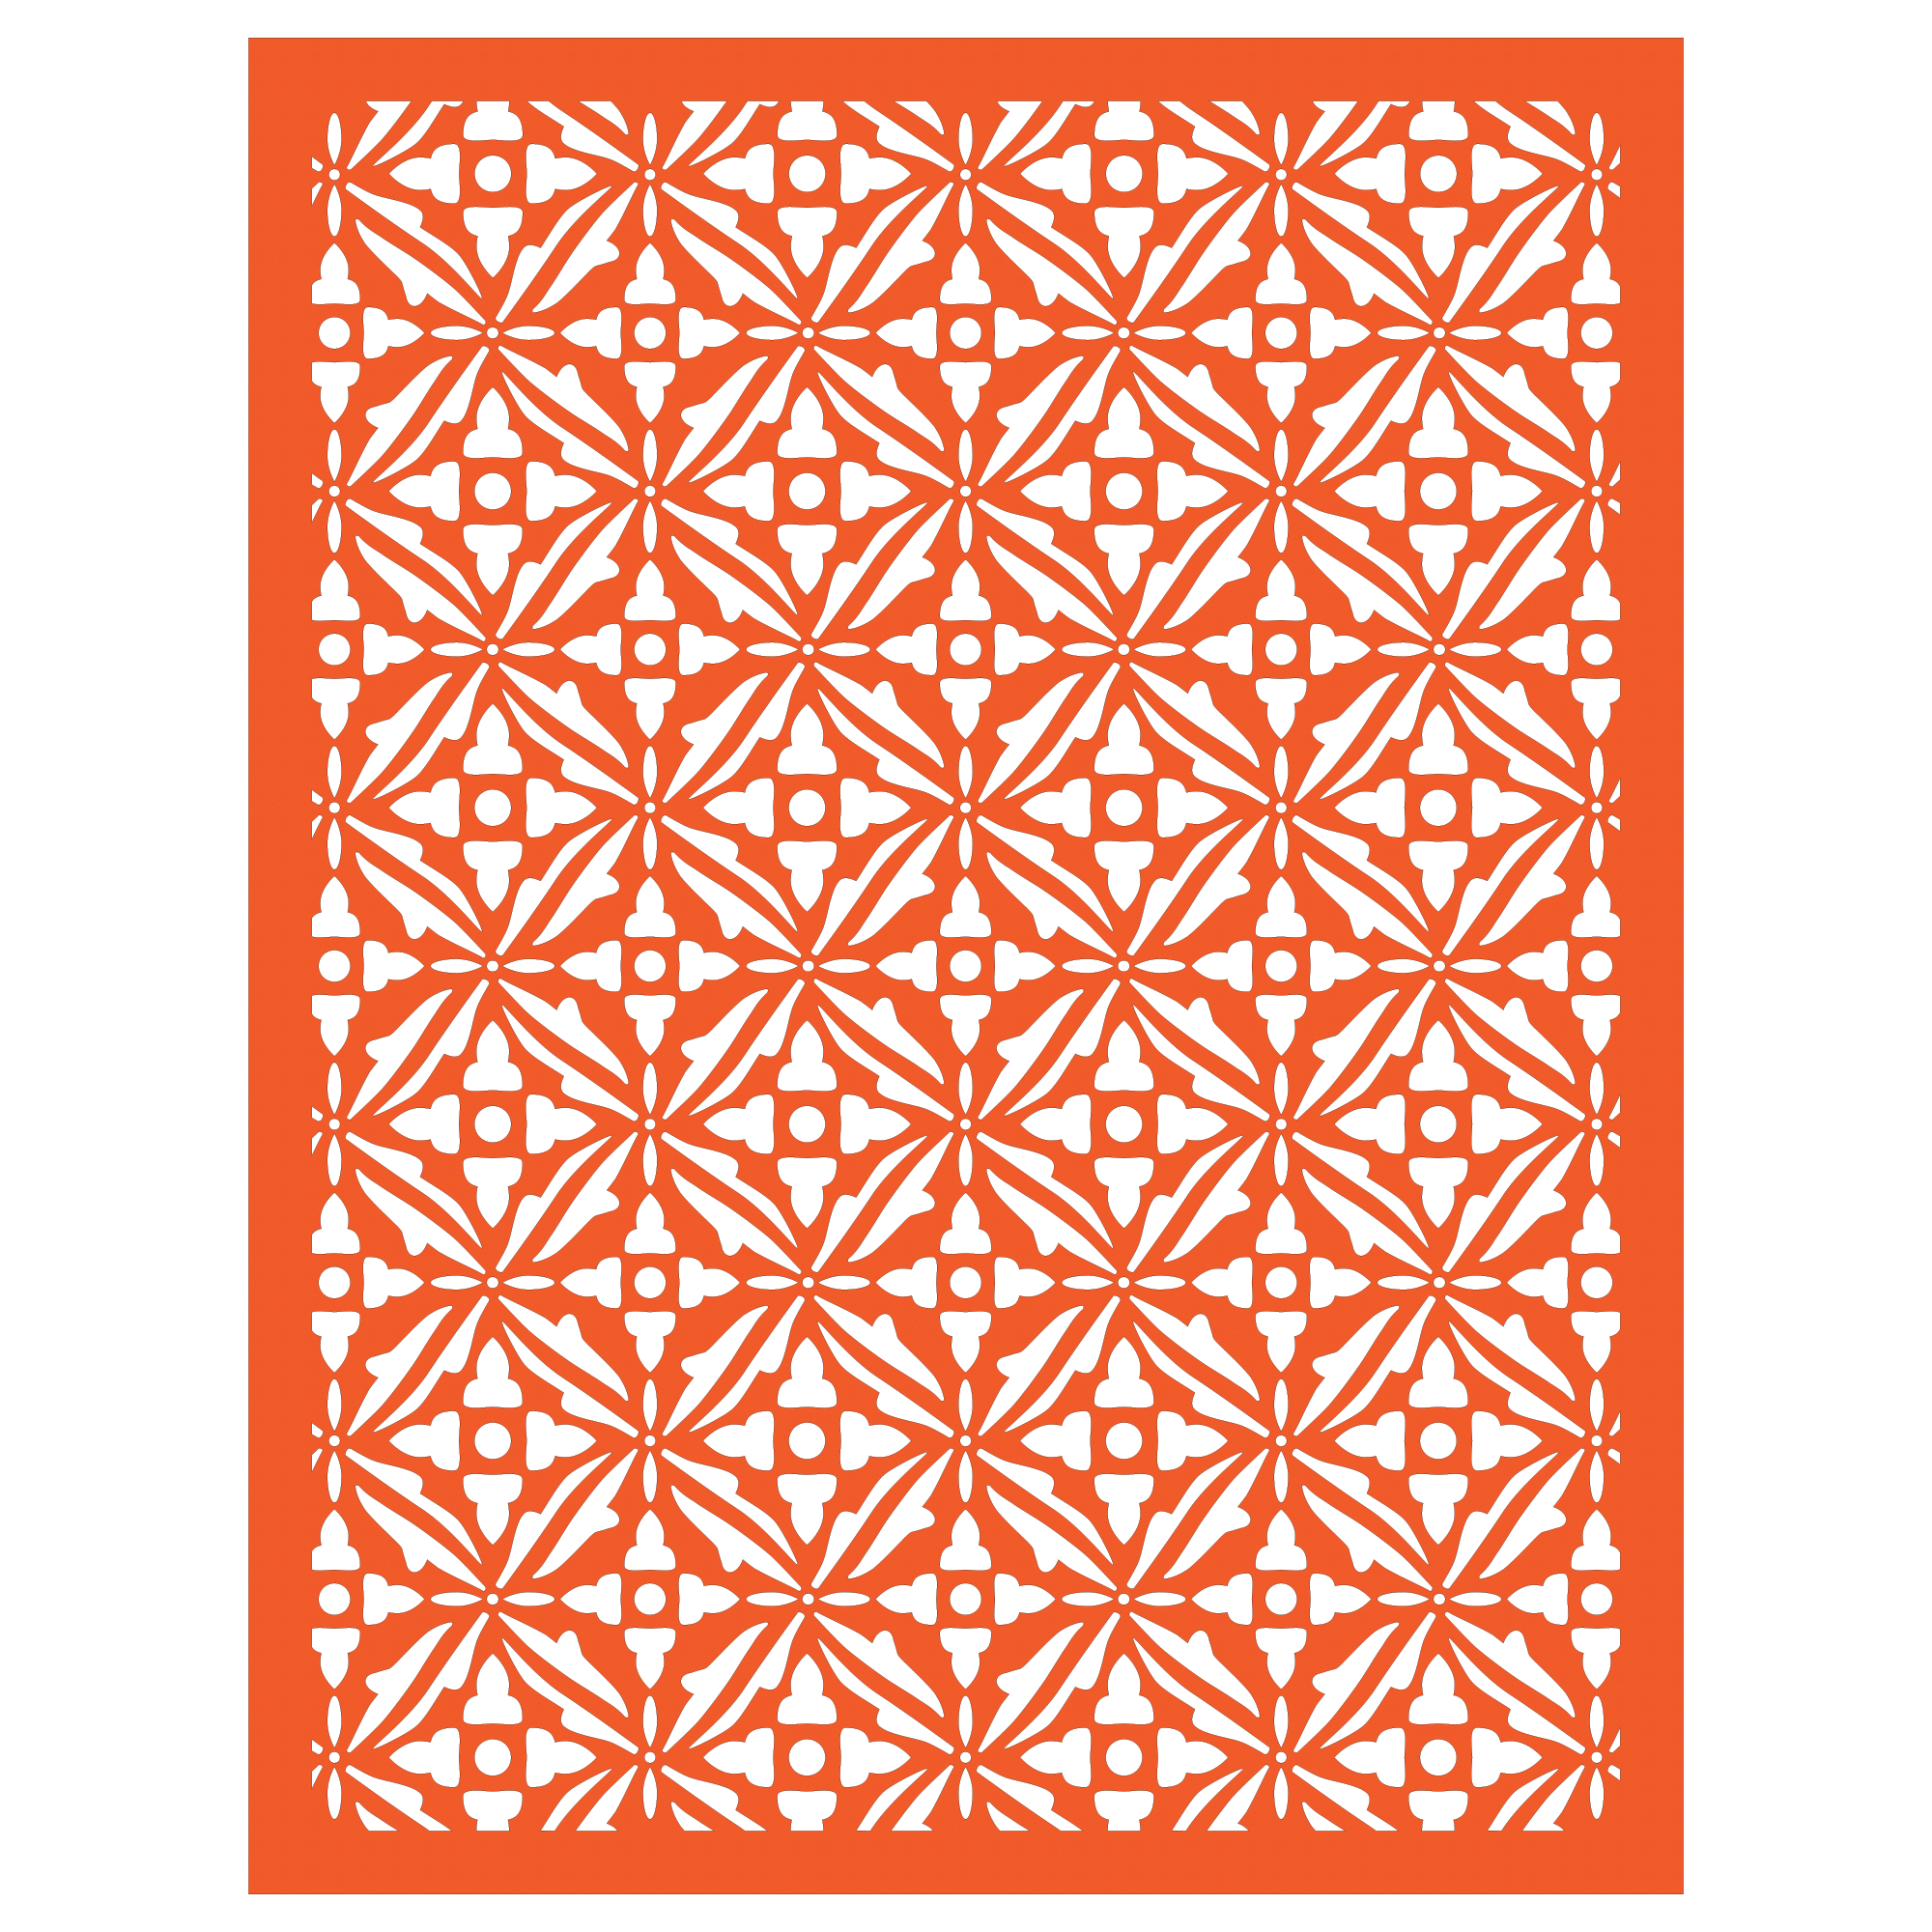 Geometric Filigree Card Base / Background / Stencil by Clikchic Designs